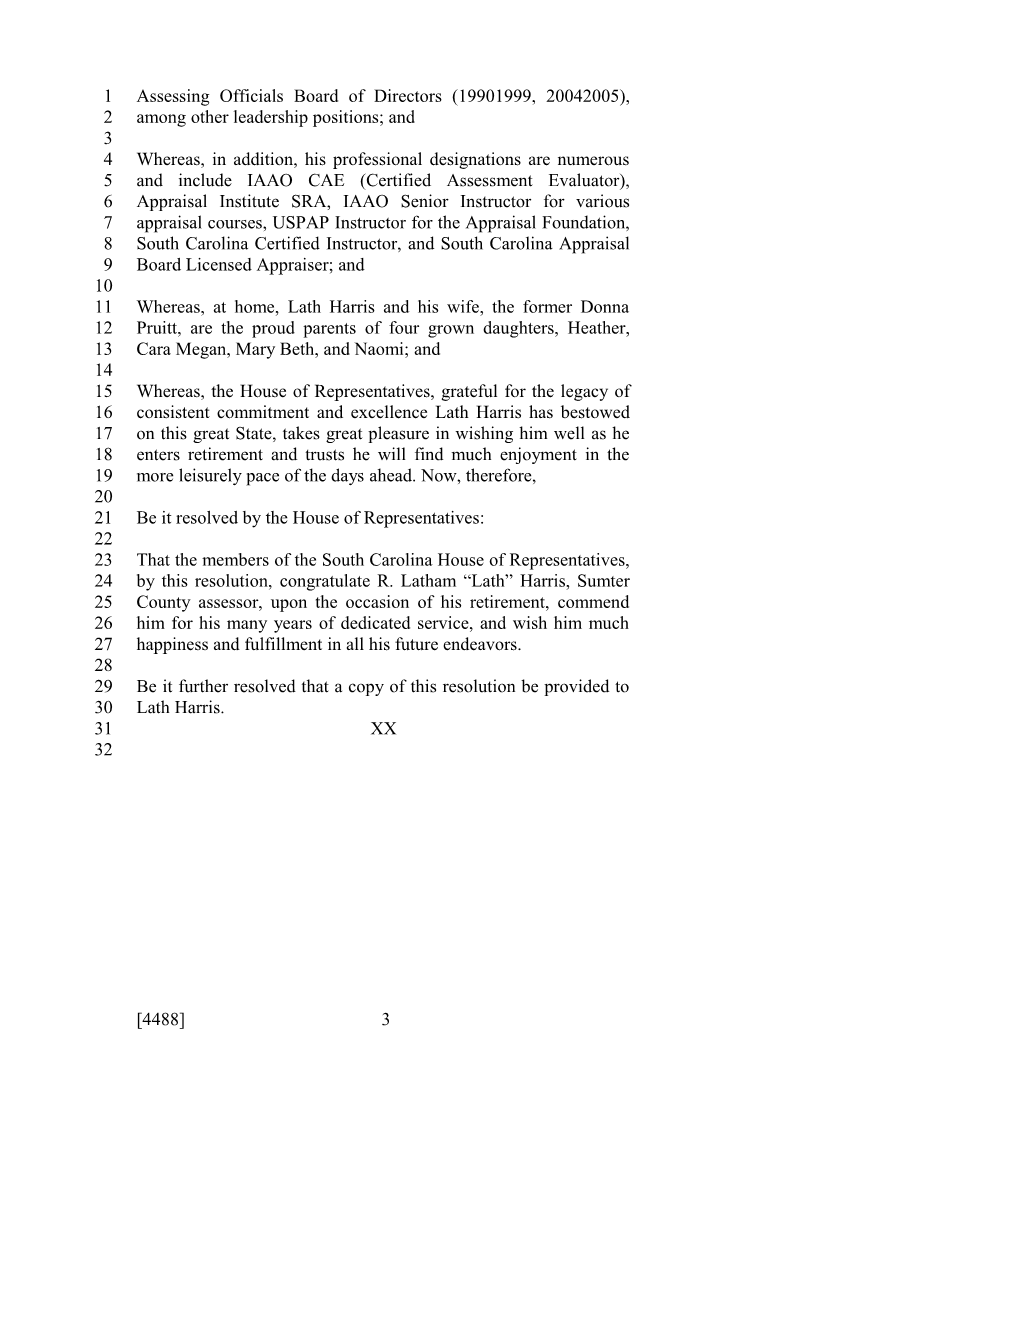 2013-2014 Bill 4488: R. Latham Harris - South Carolina Legislature Online